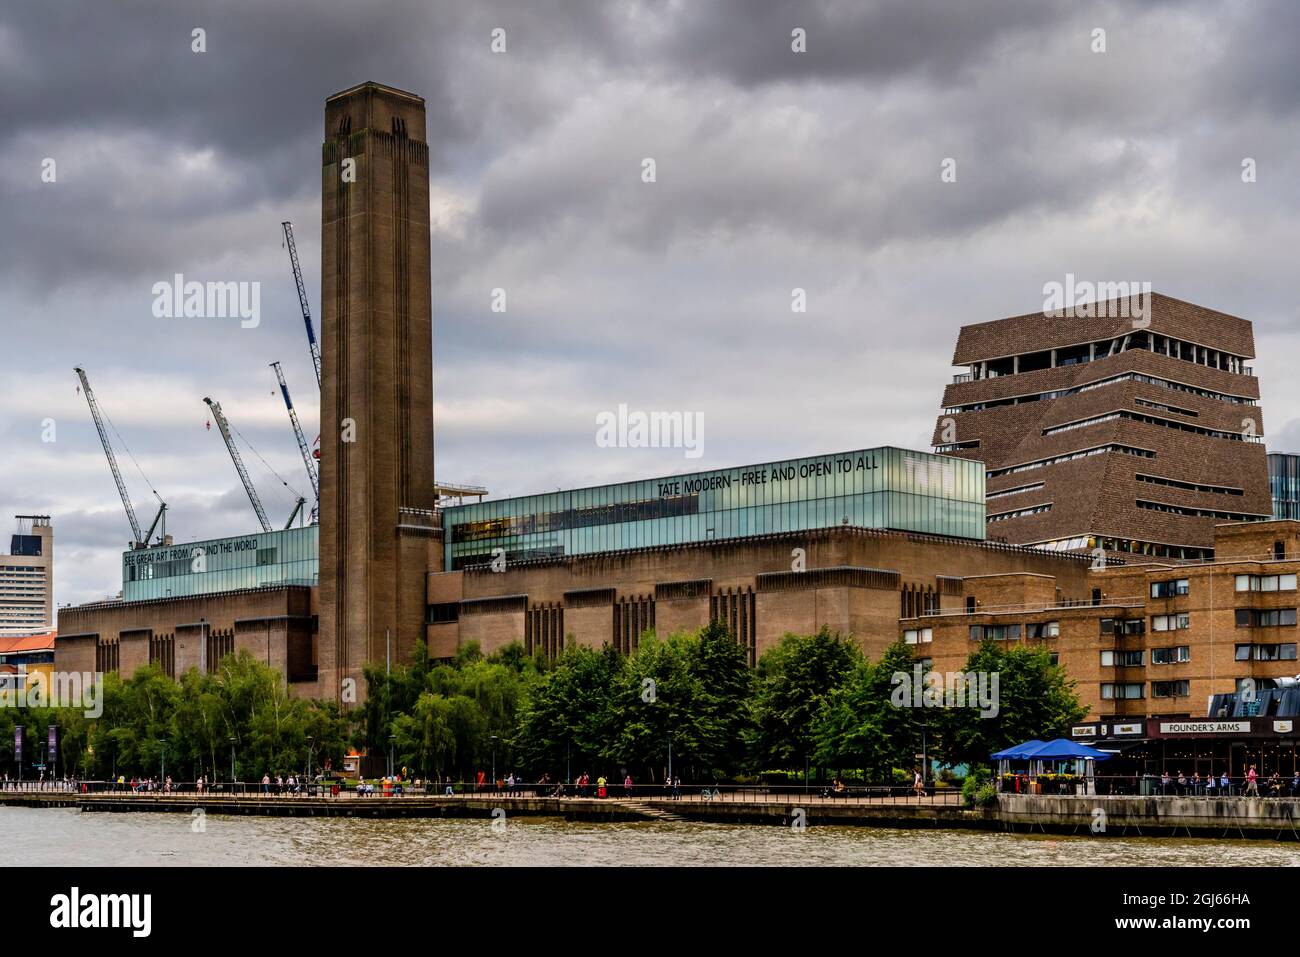 The Tate Modern Art Gallery, London, UK. Stock Photo